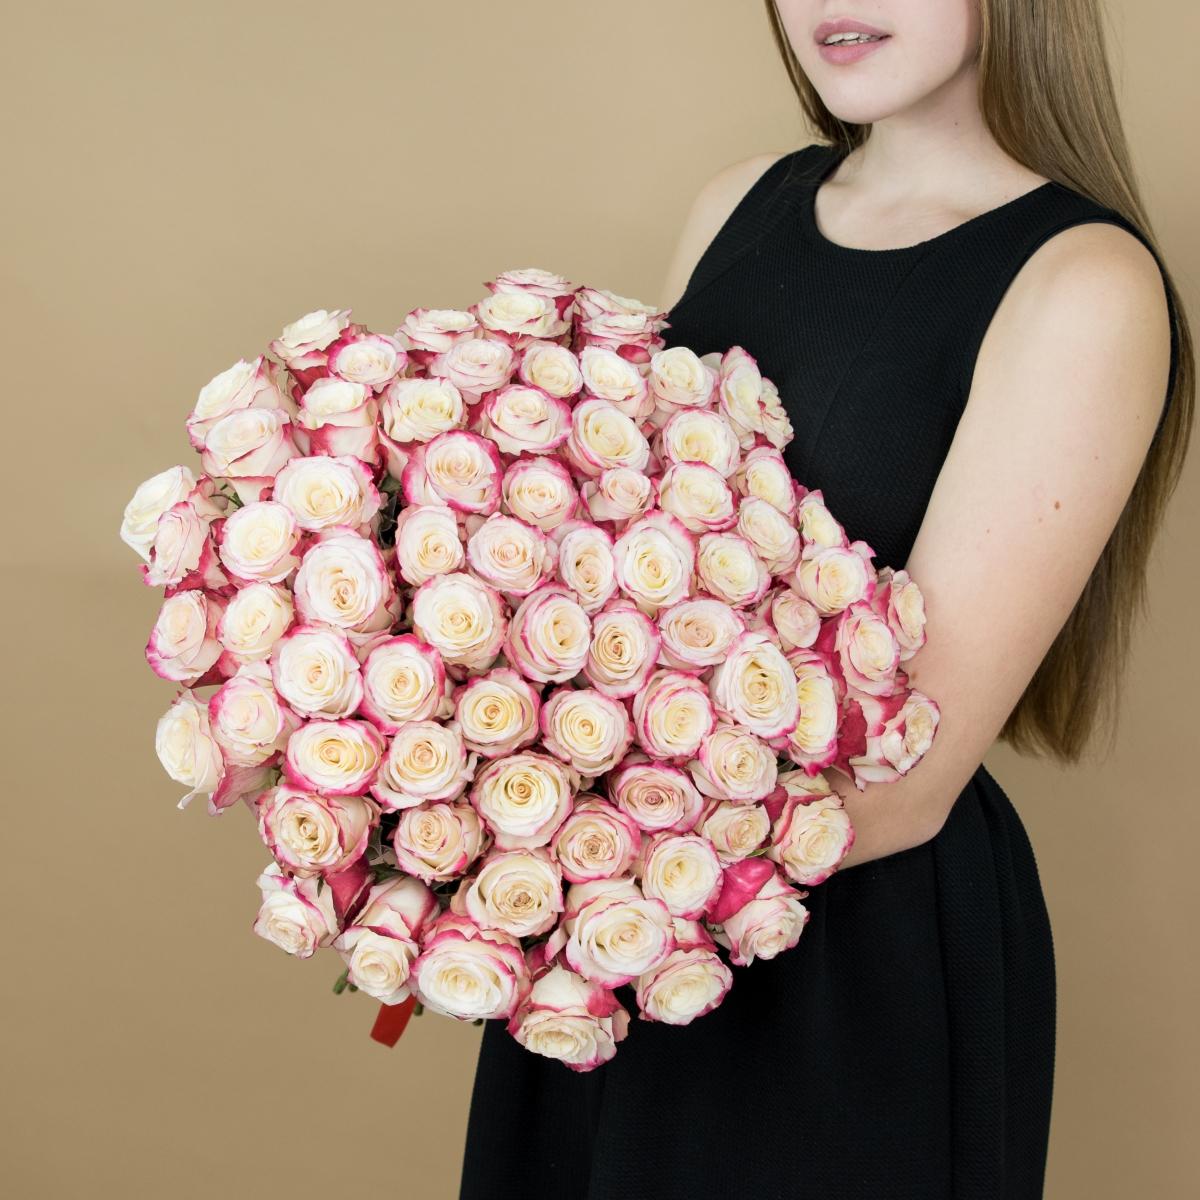 Розы красно-белые 101 шт. (40 см) артикул букета: 6408